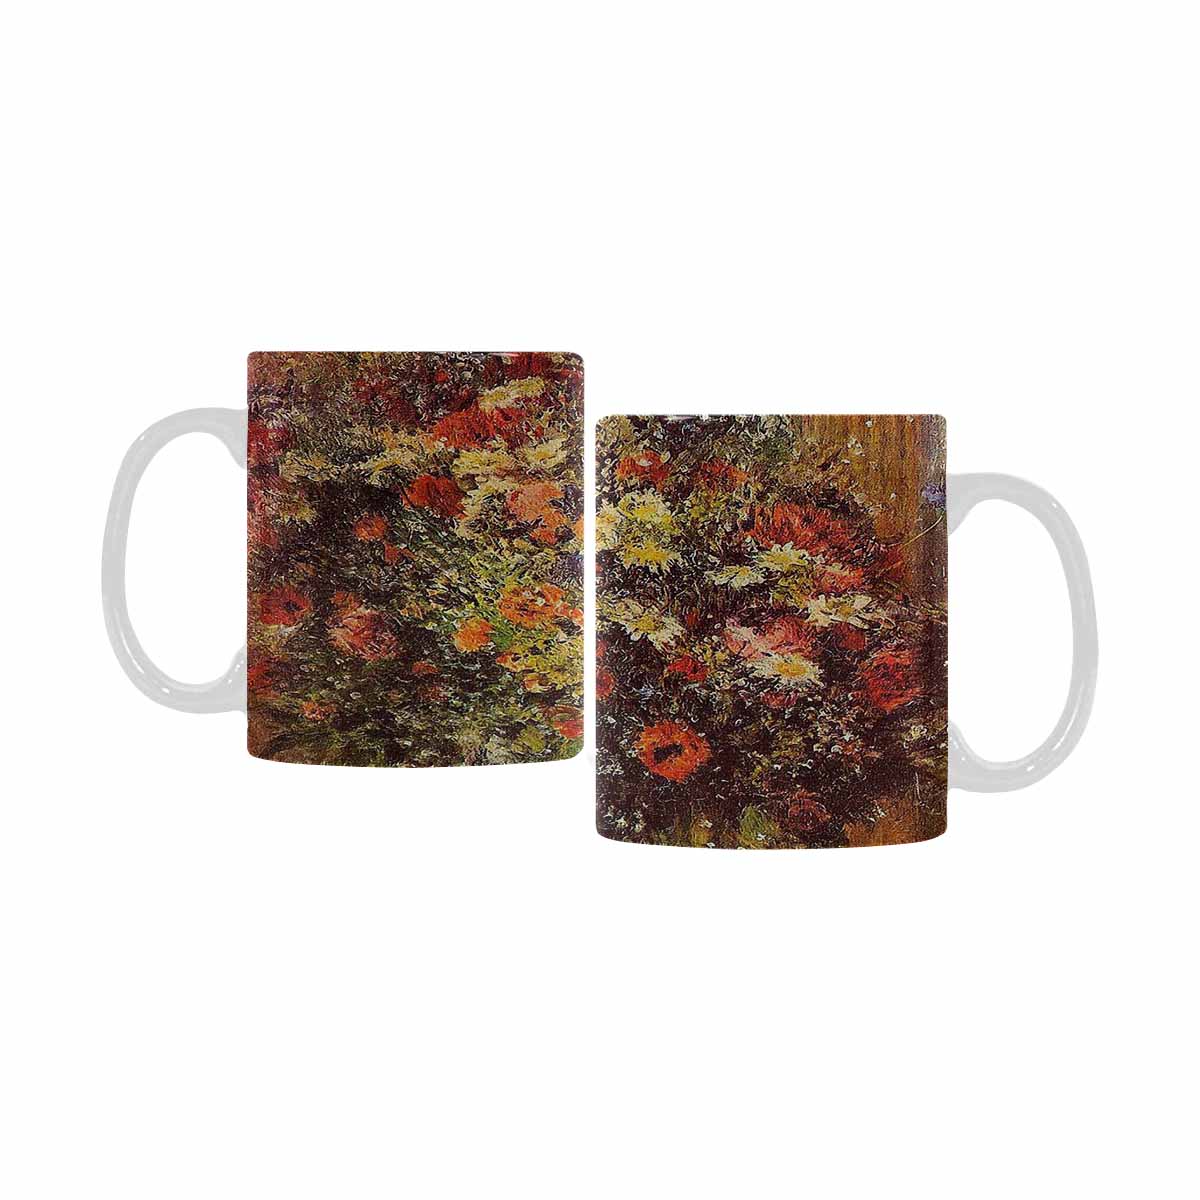 Vintage floral coffee mug or tea cup, Design 24